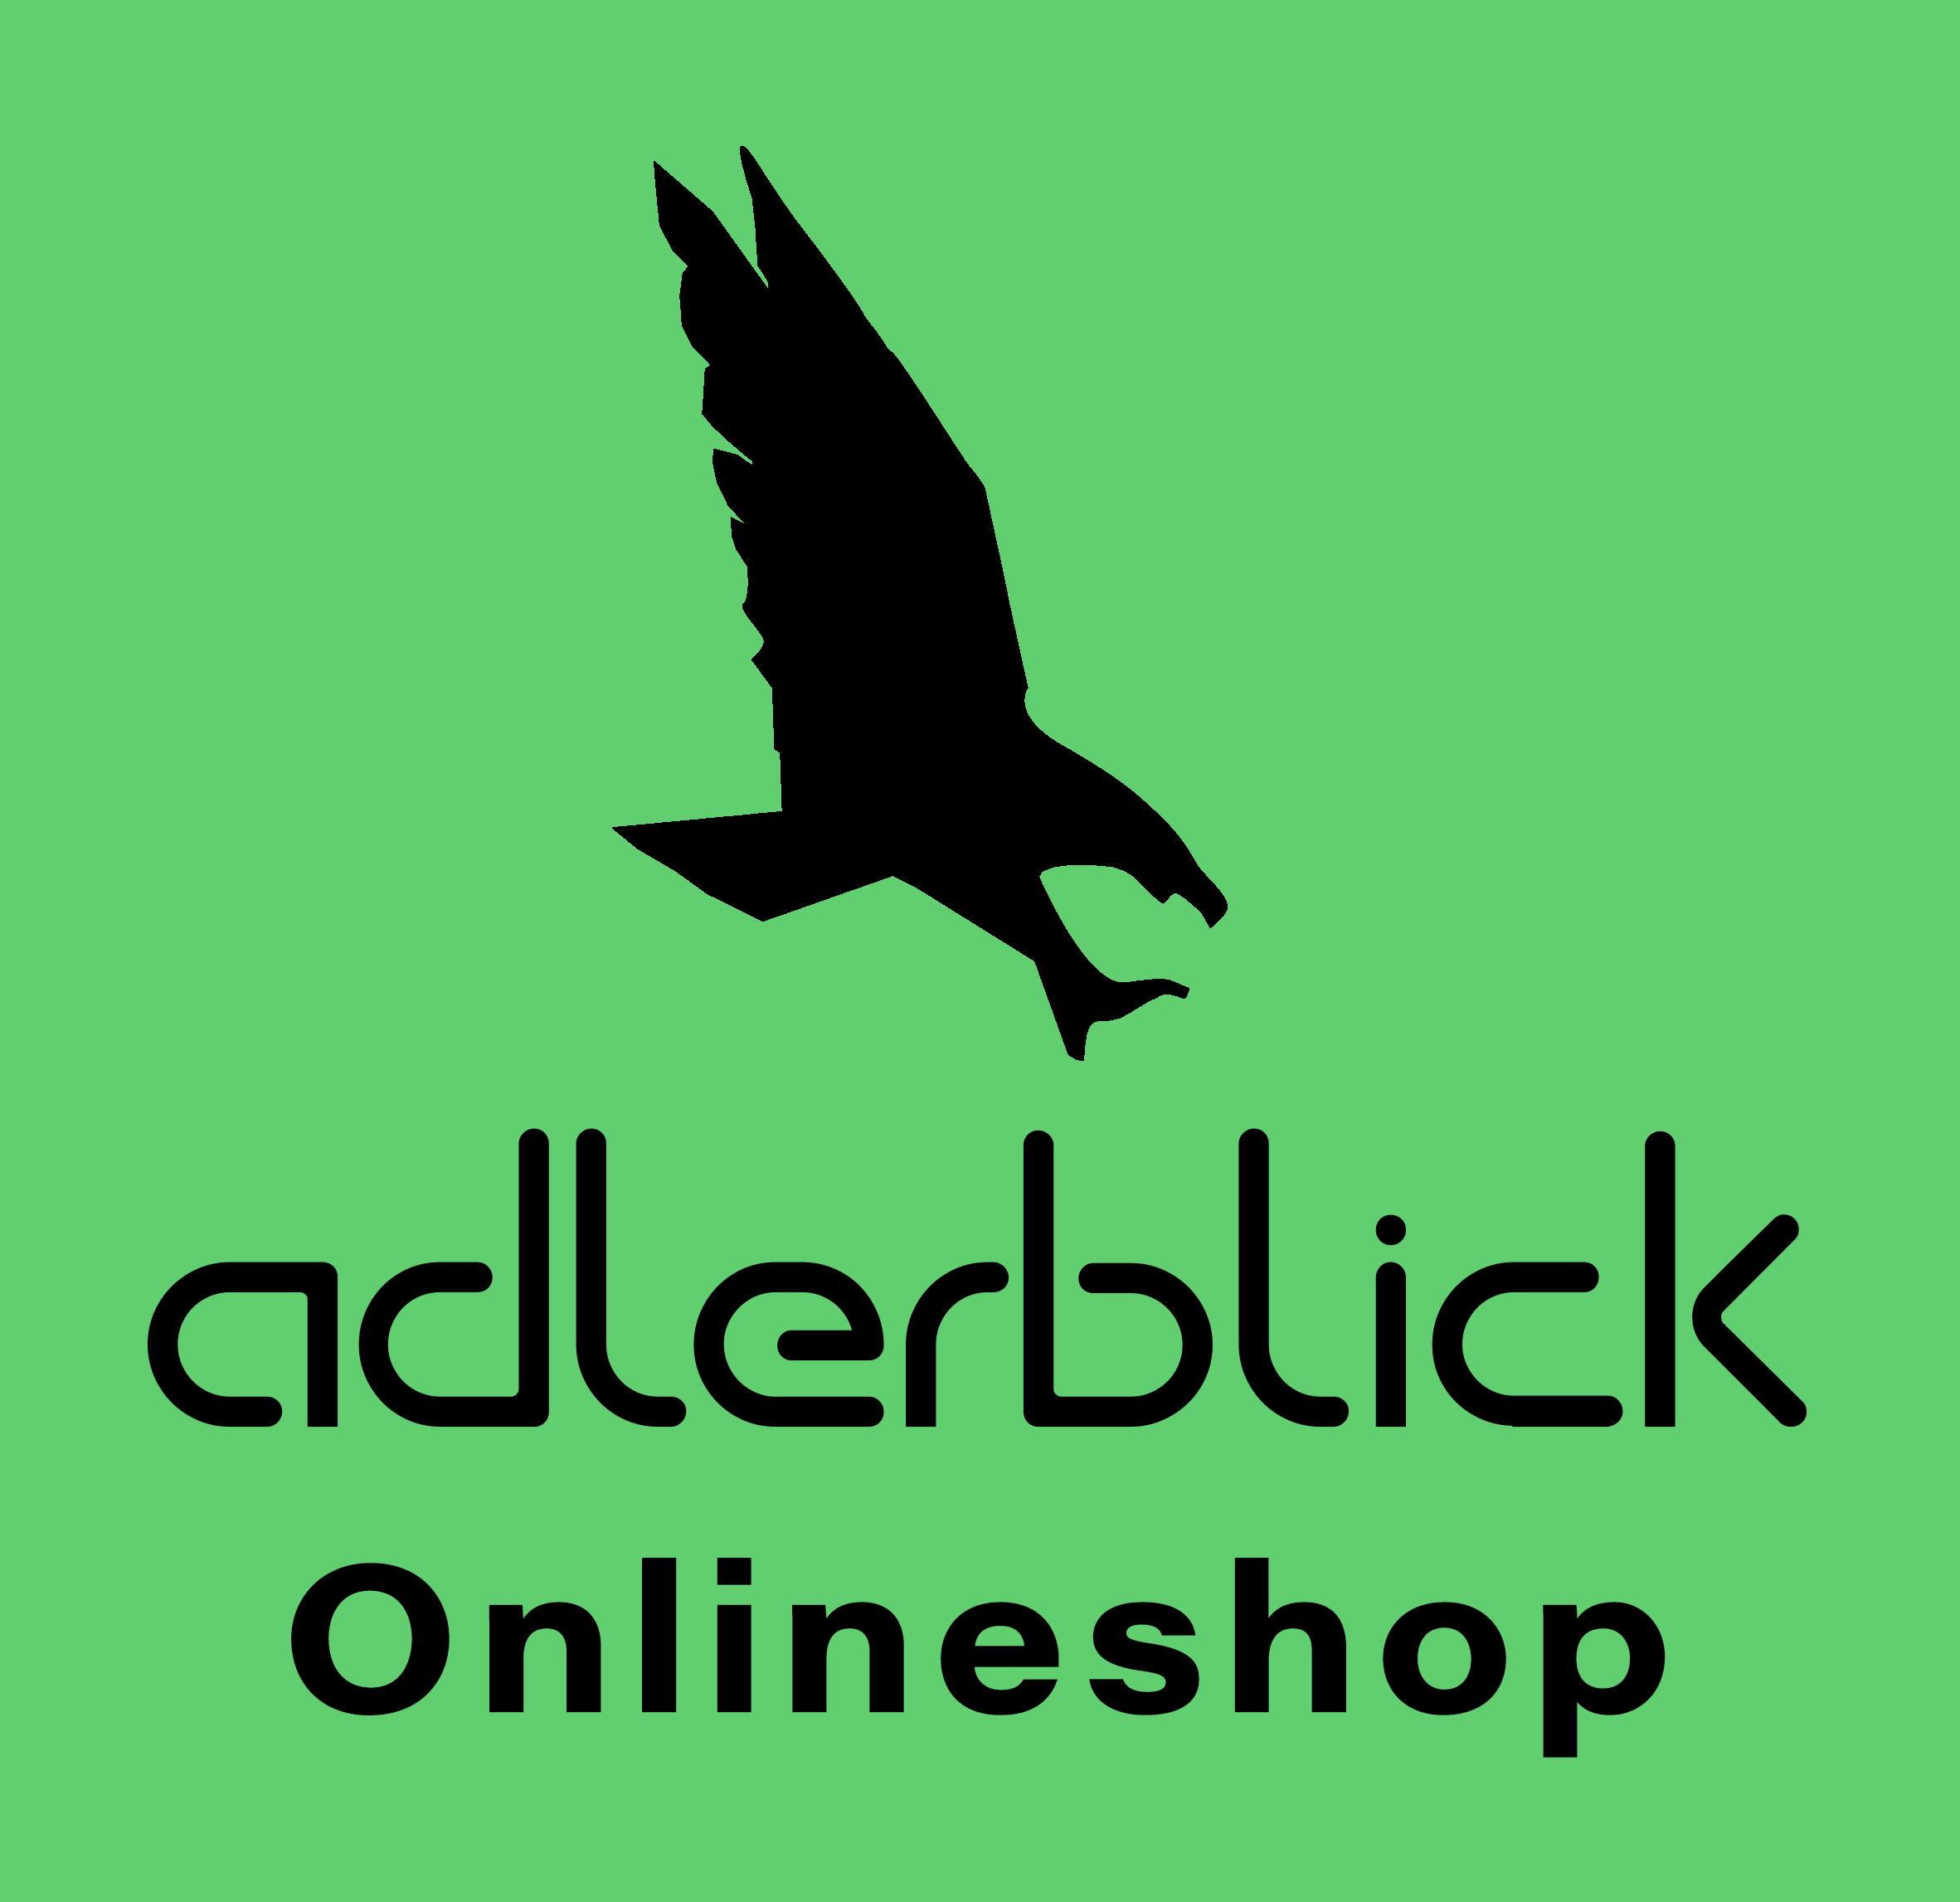 Adlerblick Onlineshop Logo